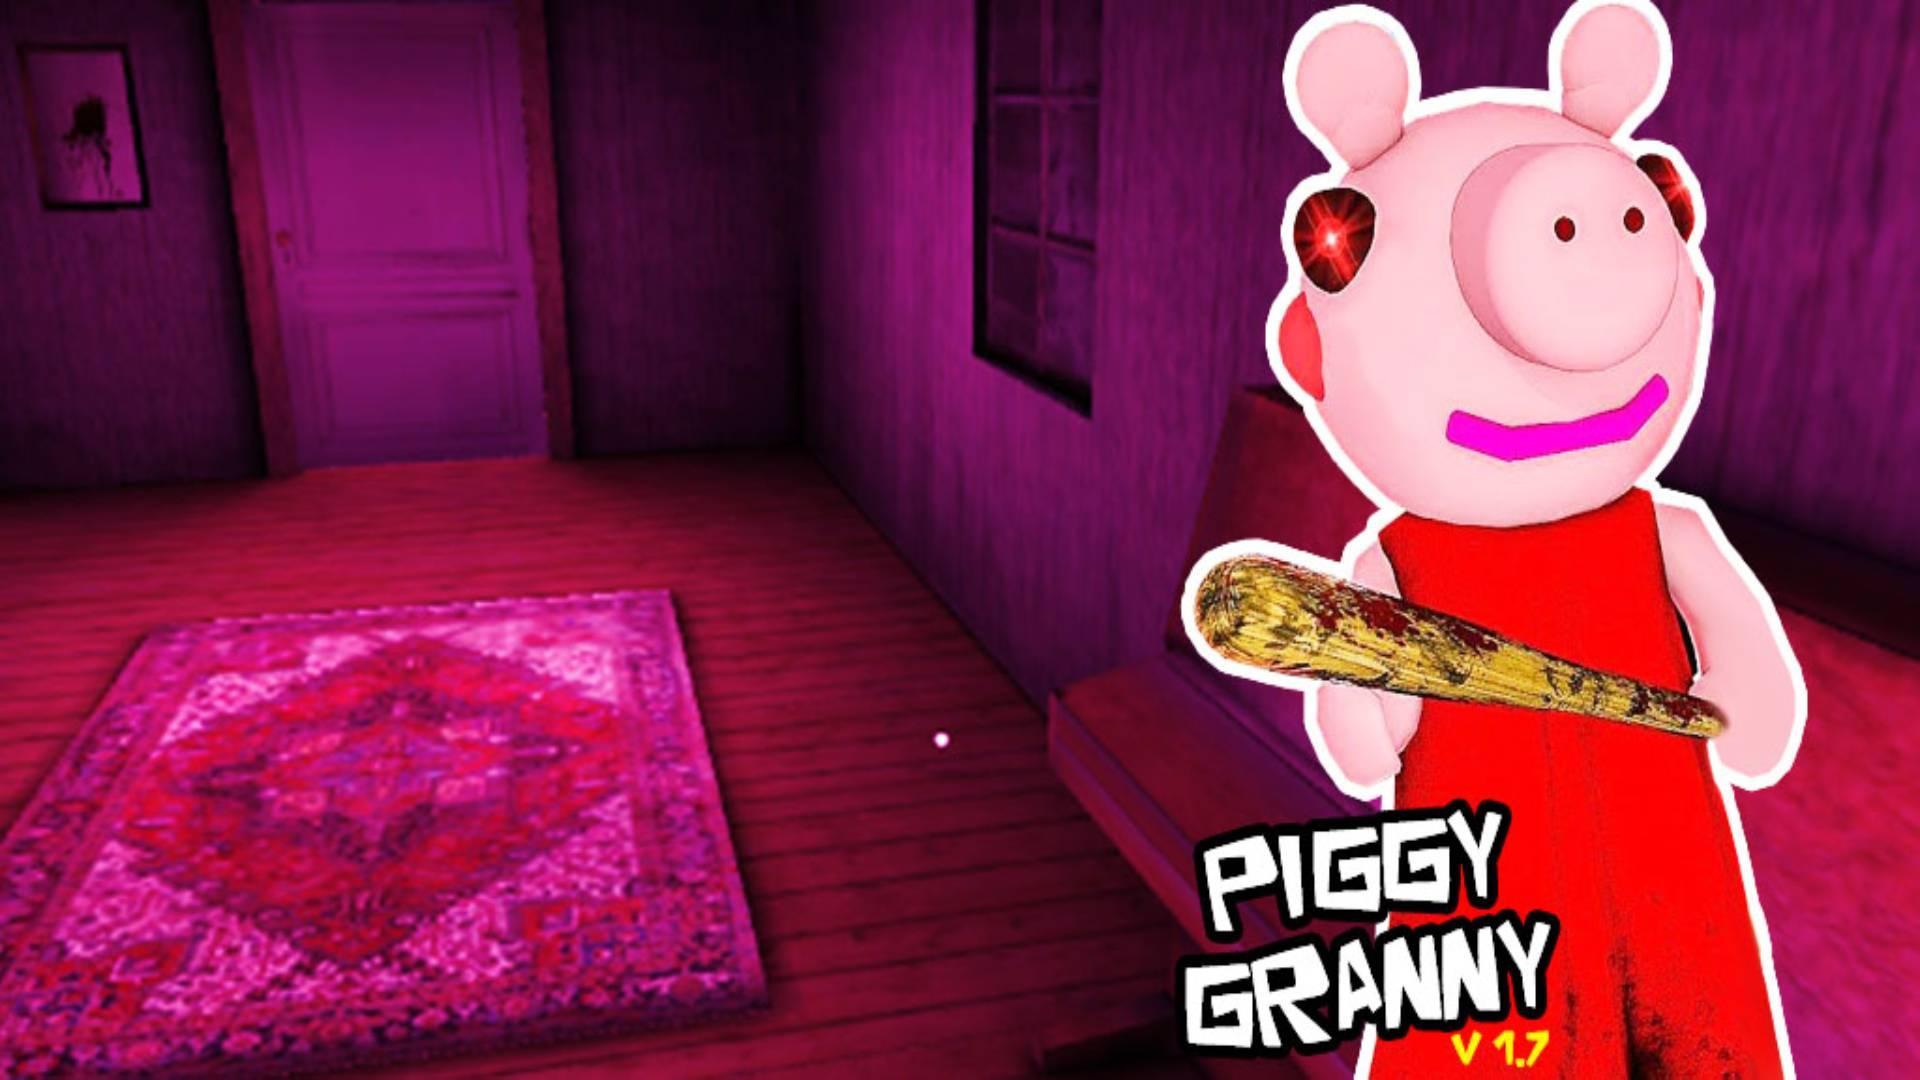 Piggy Granny Roblx Scary Mod For Android Apk Download - roblox granny hack 2021